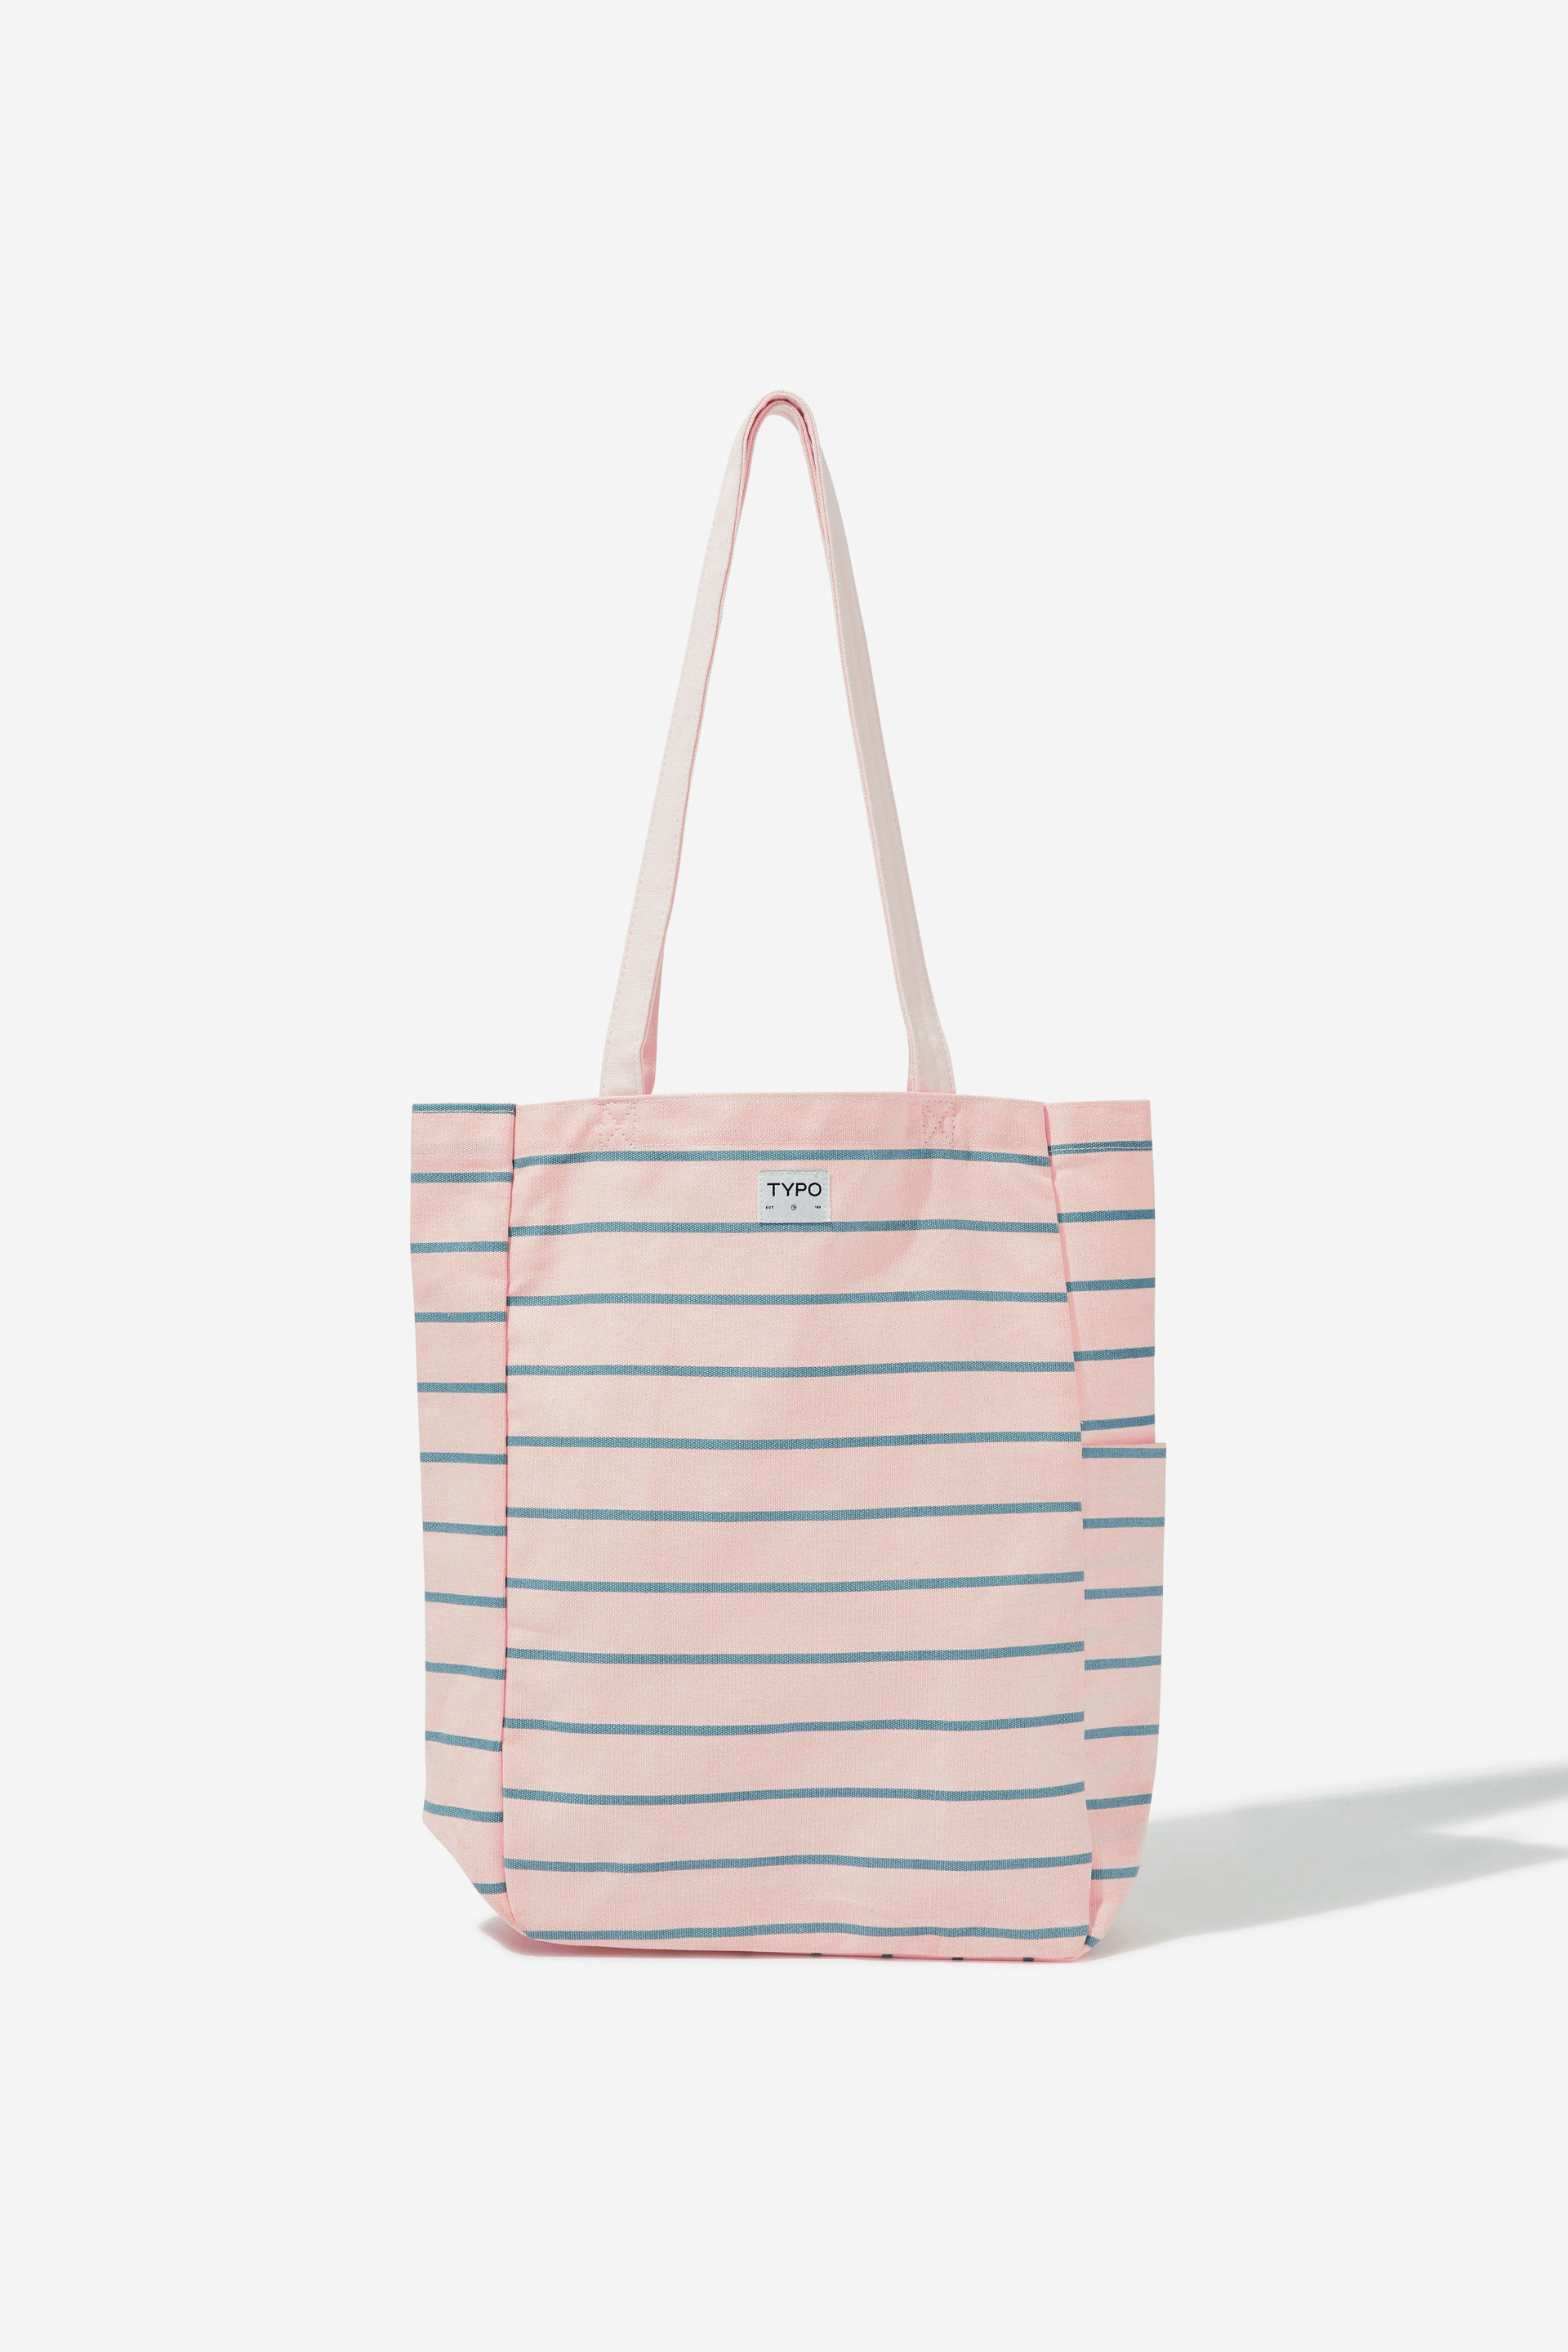 Typo - Art Tote Bag - Varsity stripe/ ballet blush